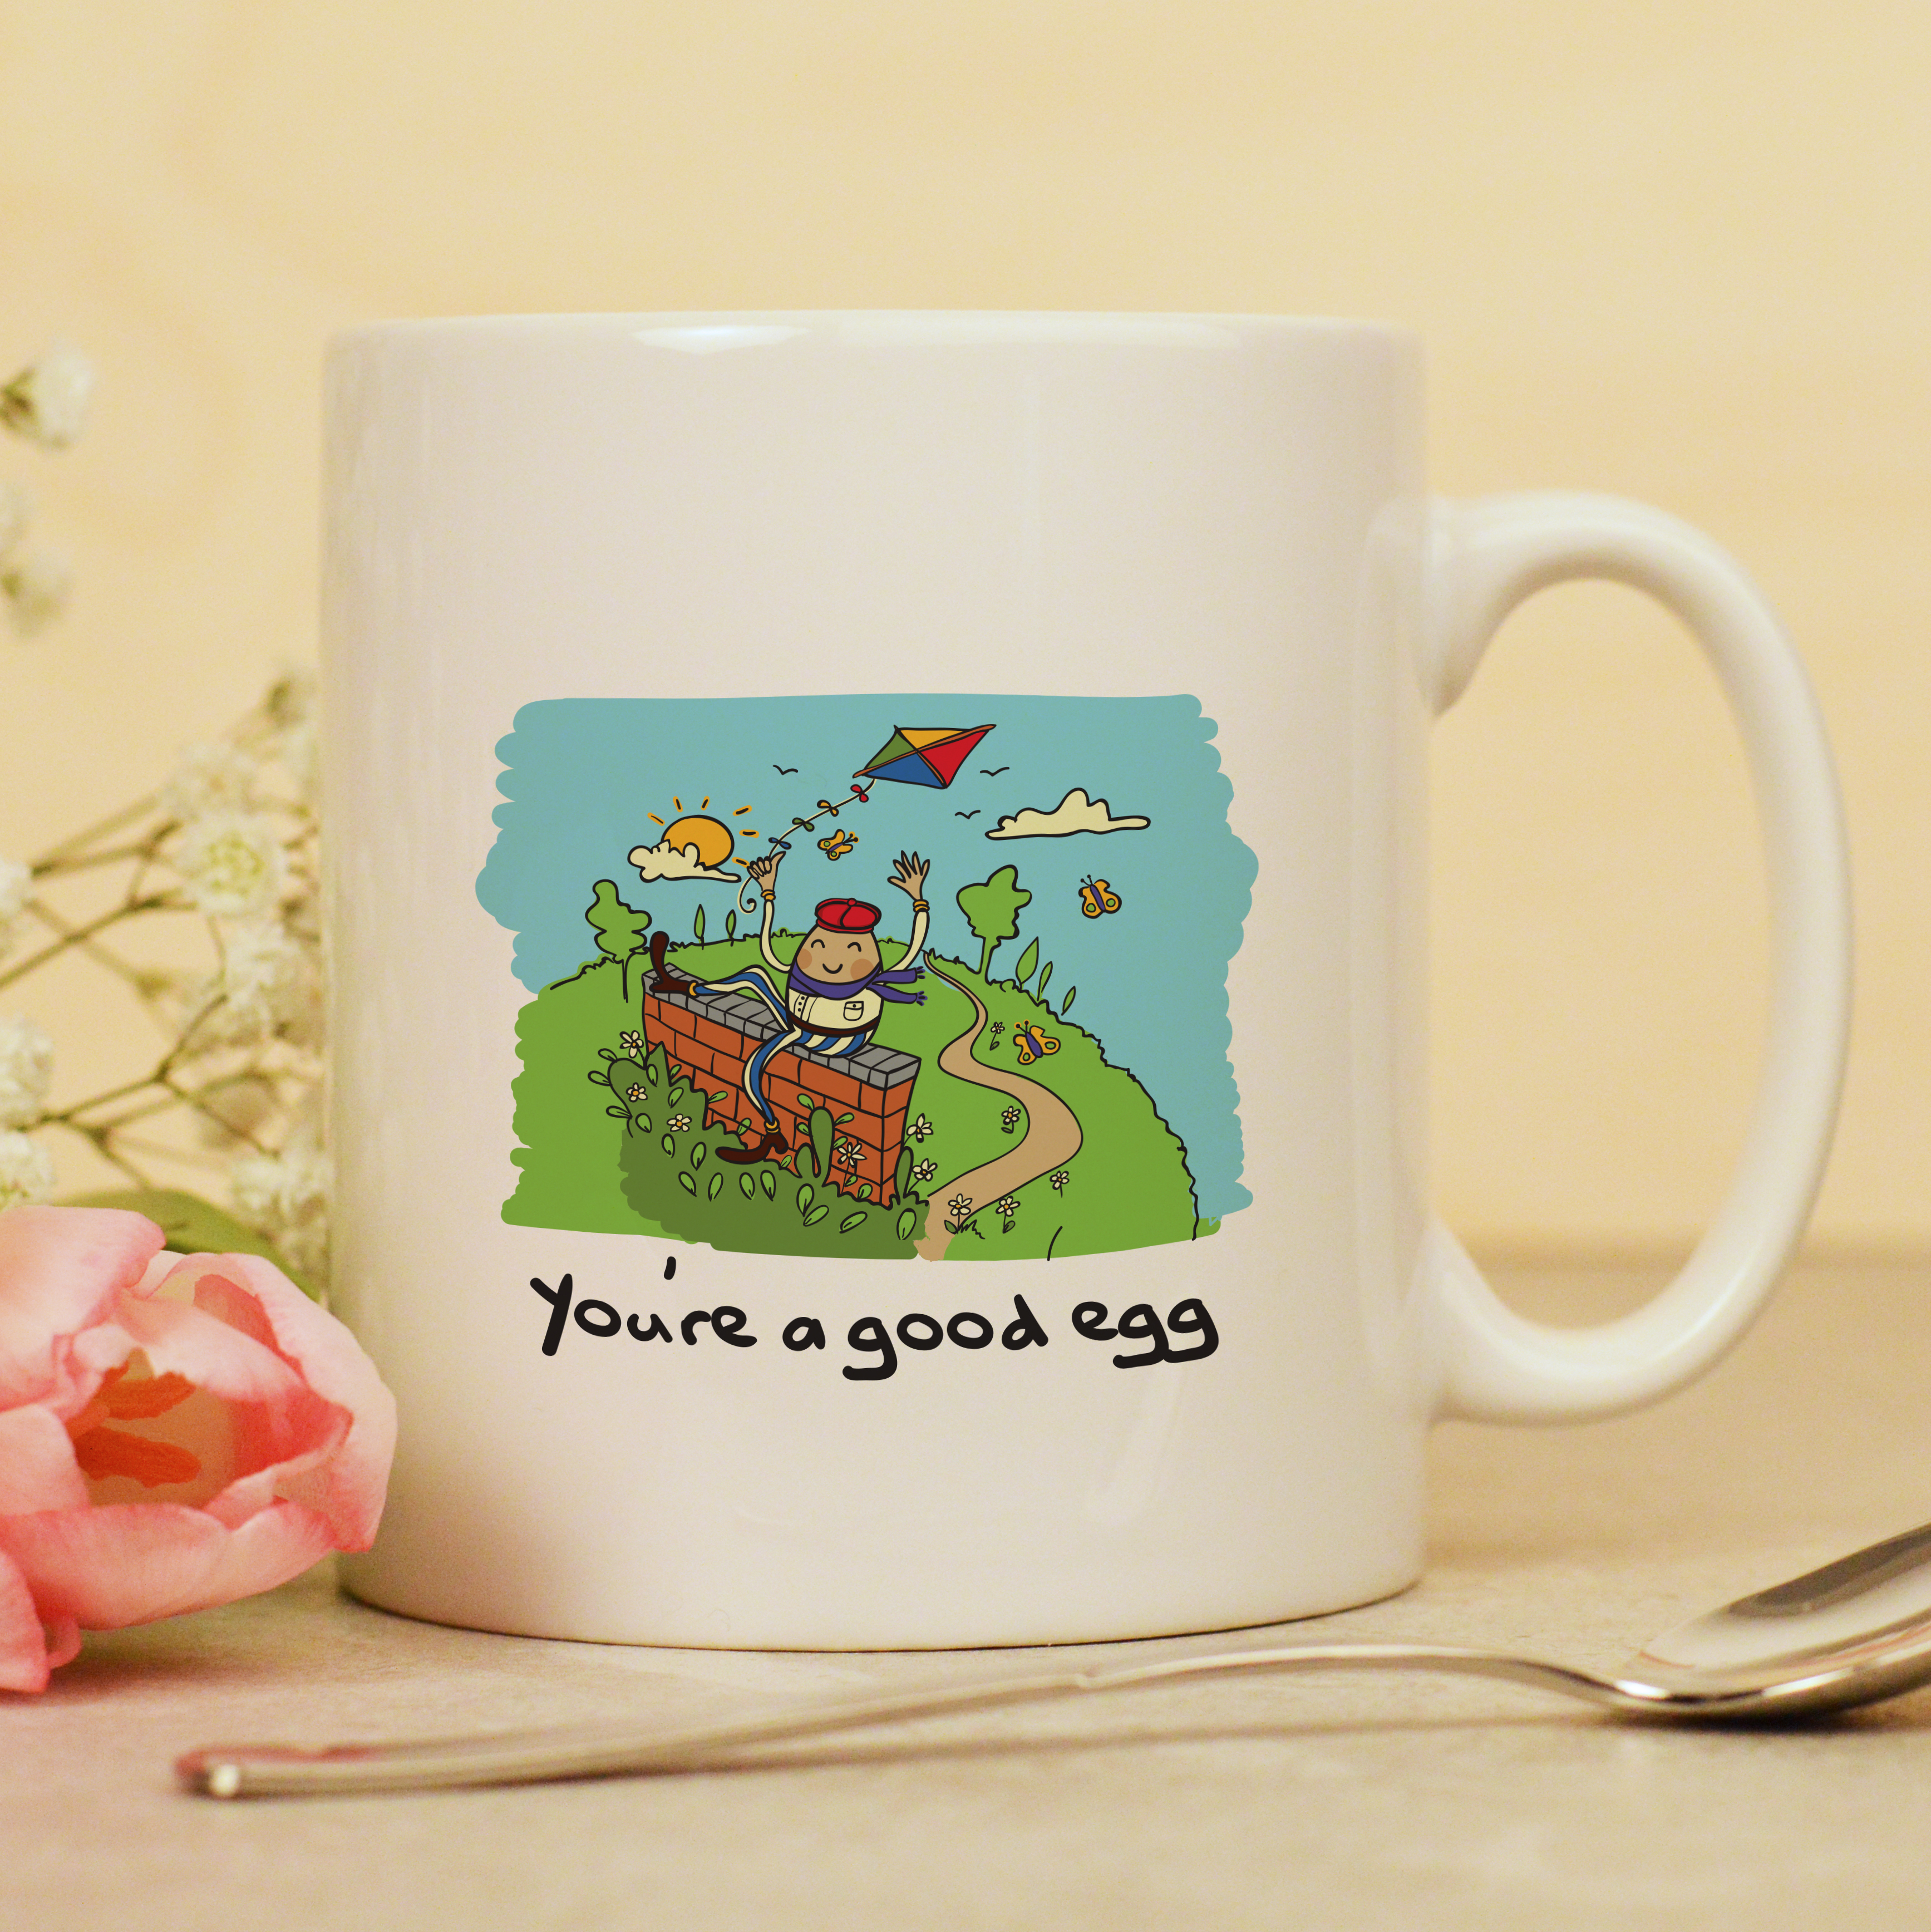 You’re a good egg mug